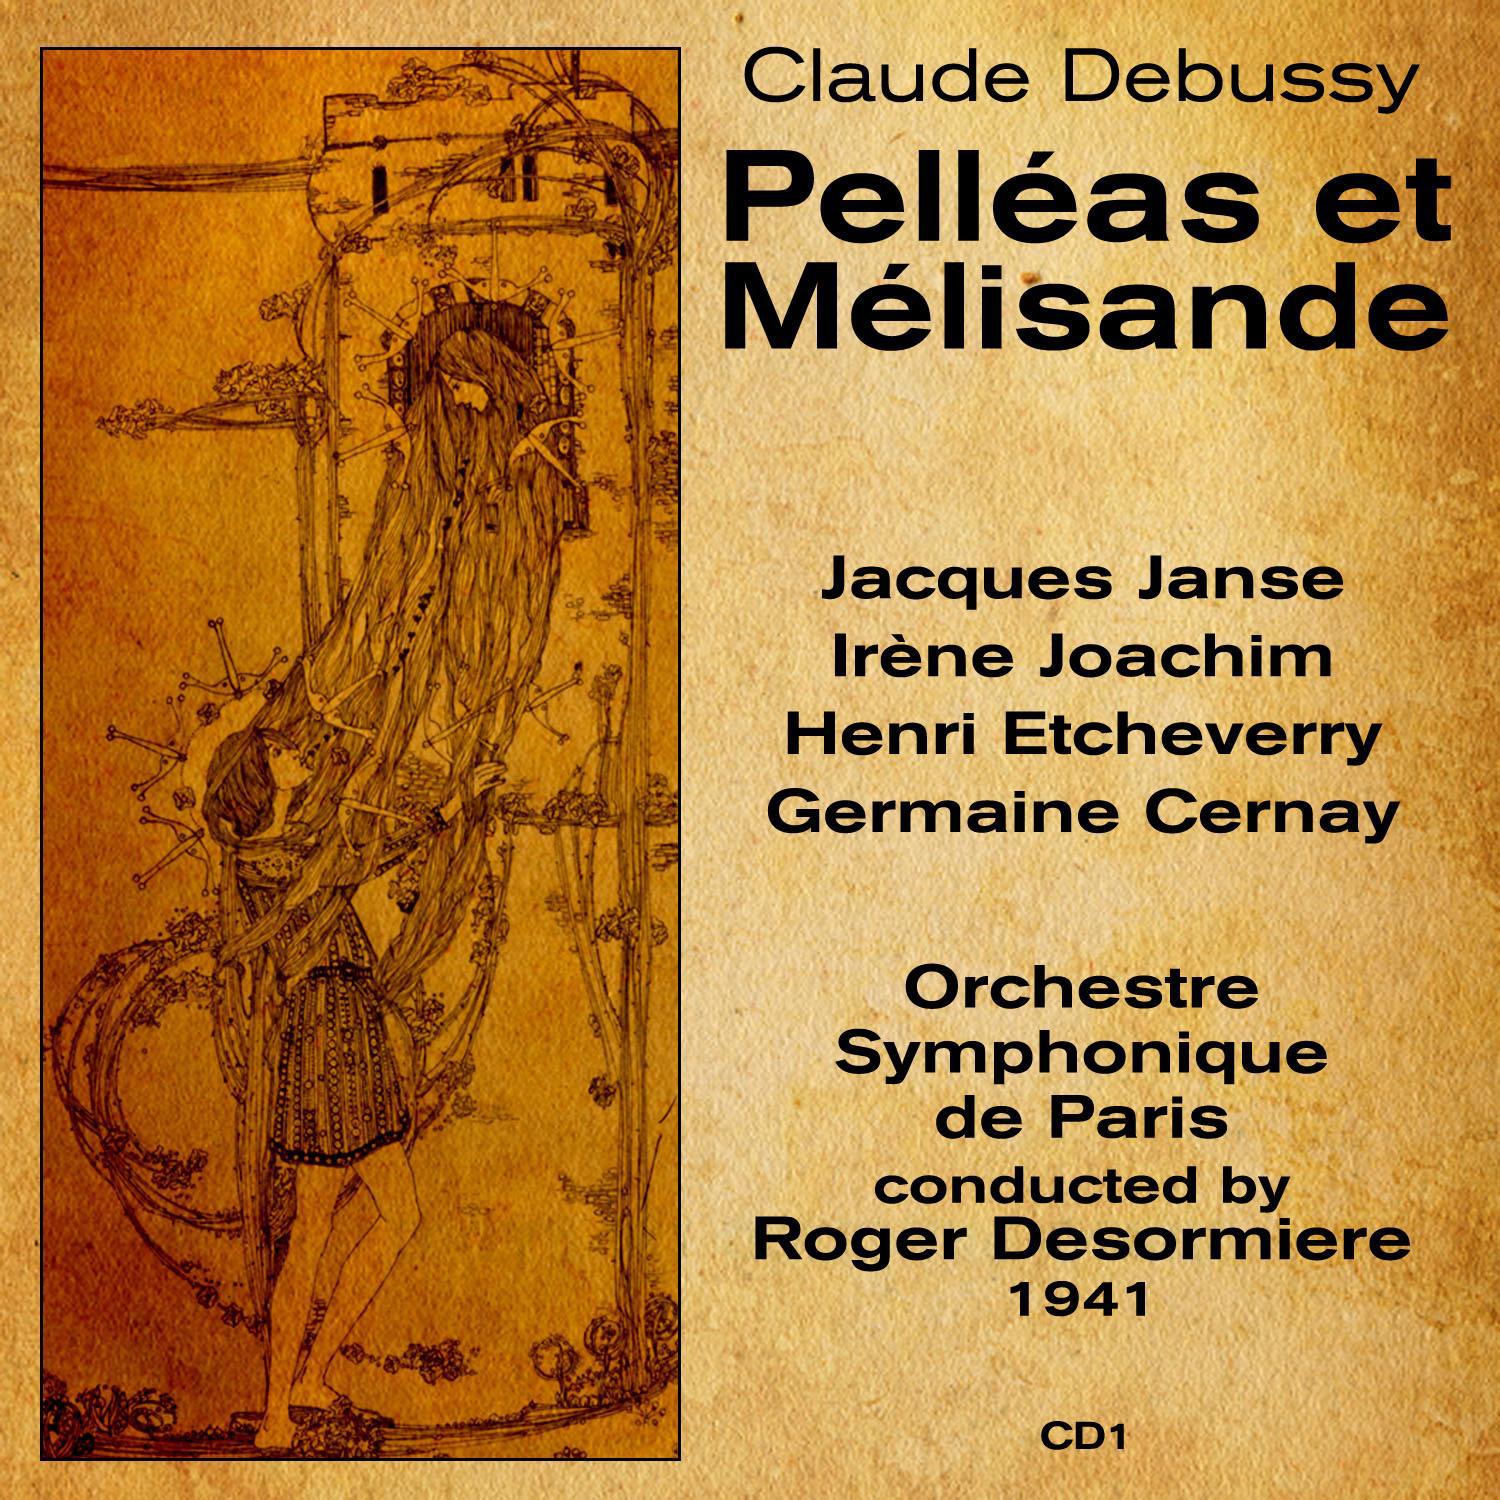 Claude Debussy - Pelléas et Mélisande: Act IV, Scene 1, 